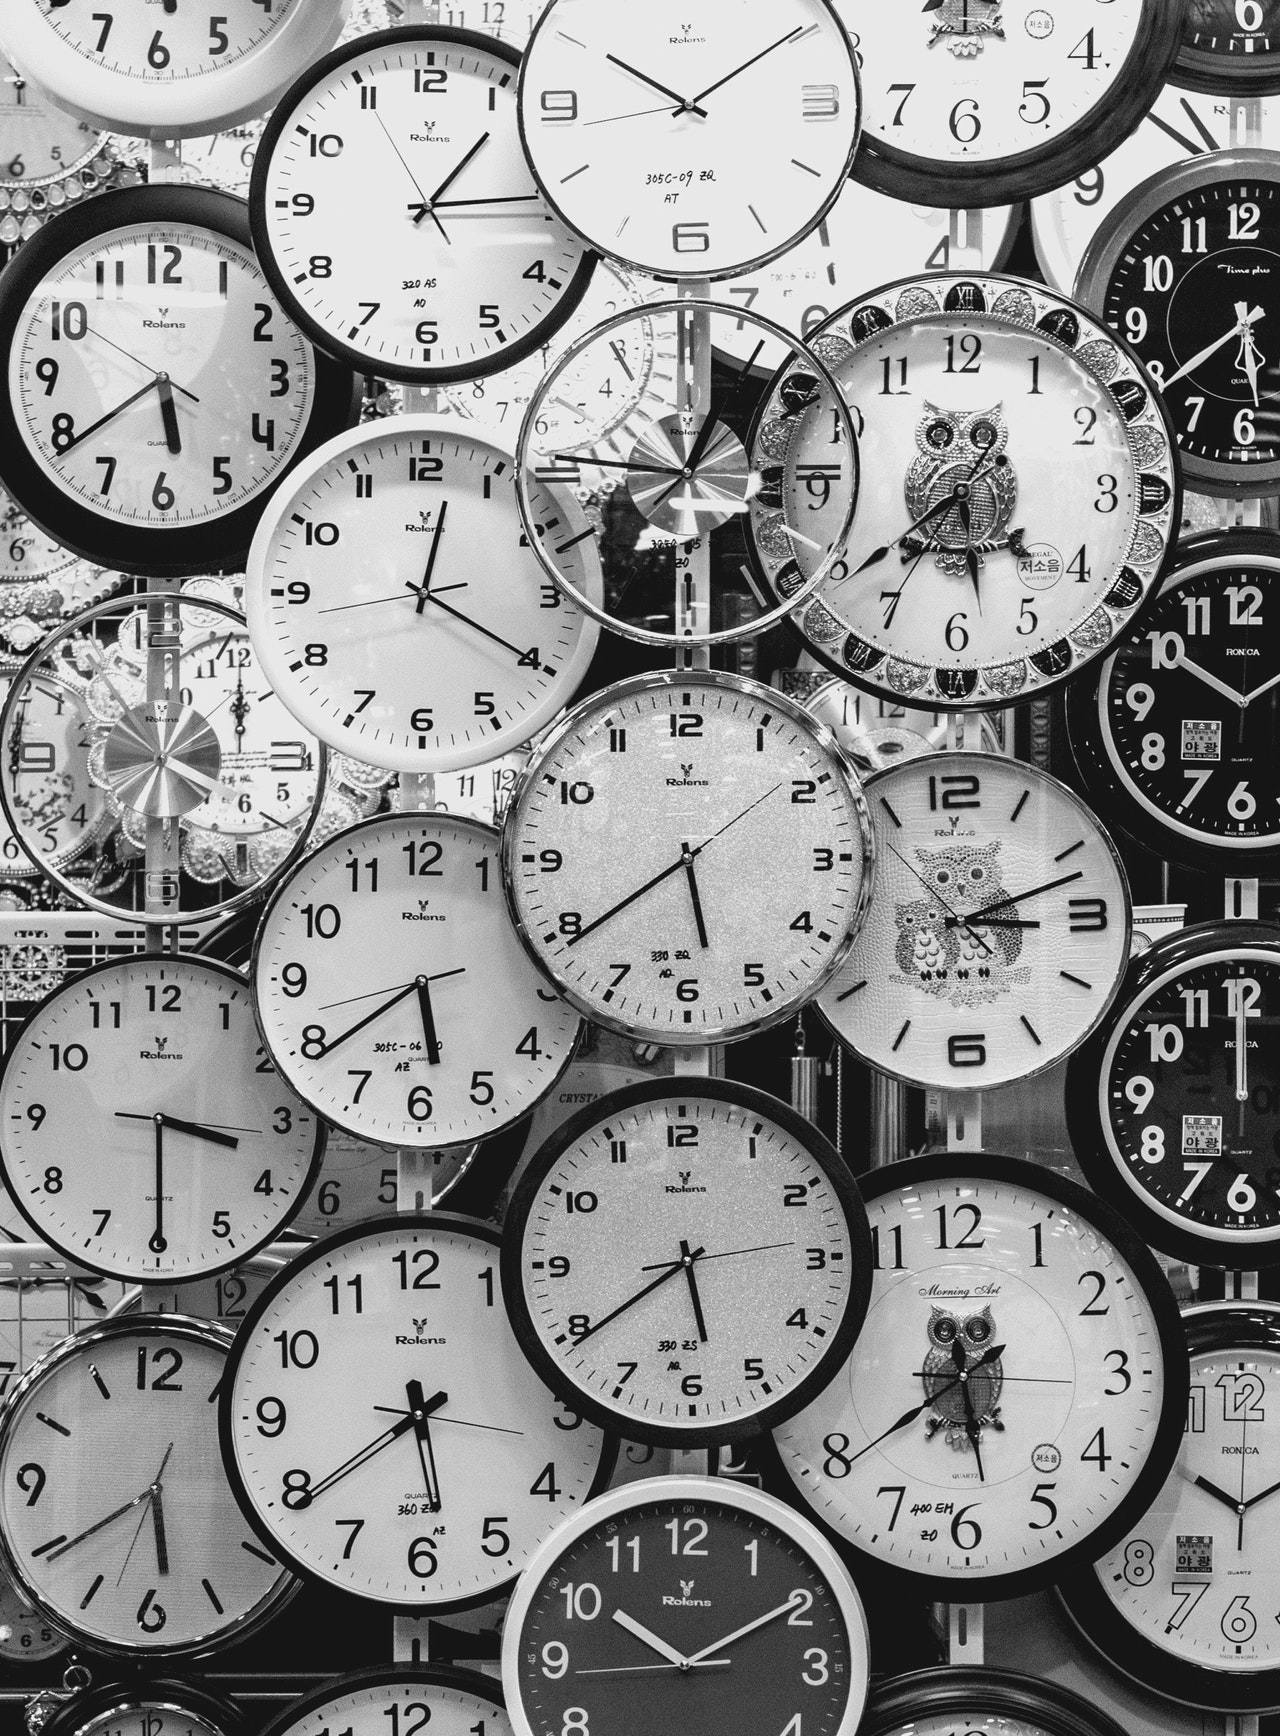 Making the Make Time Clock: